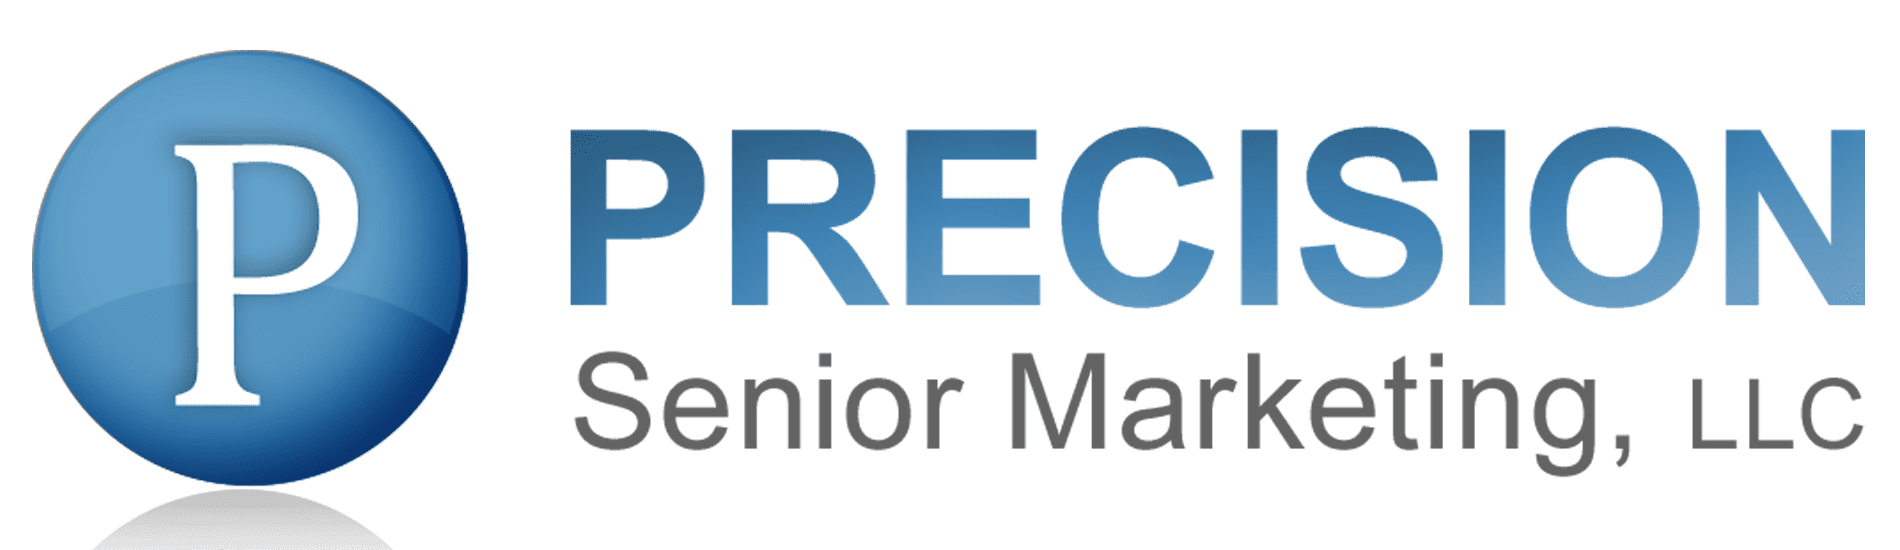 Precision Senior Marketing